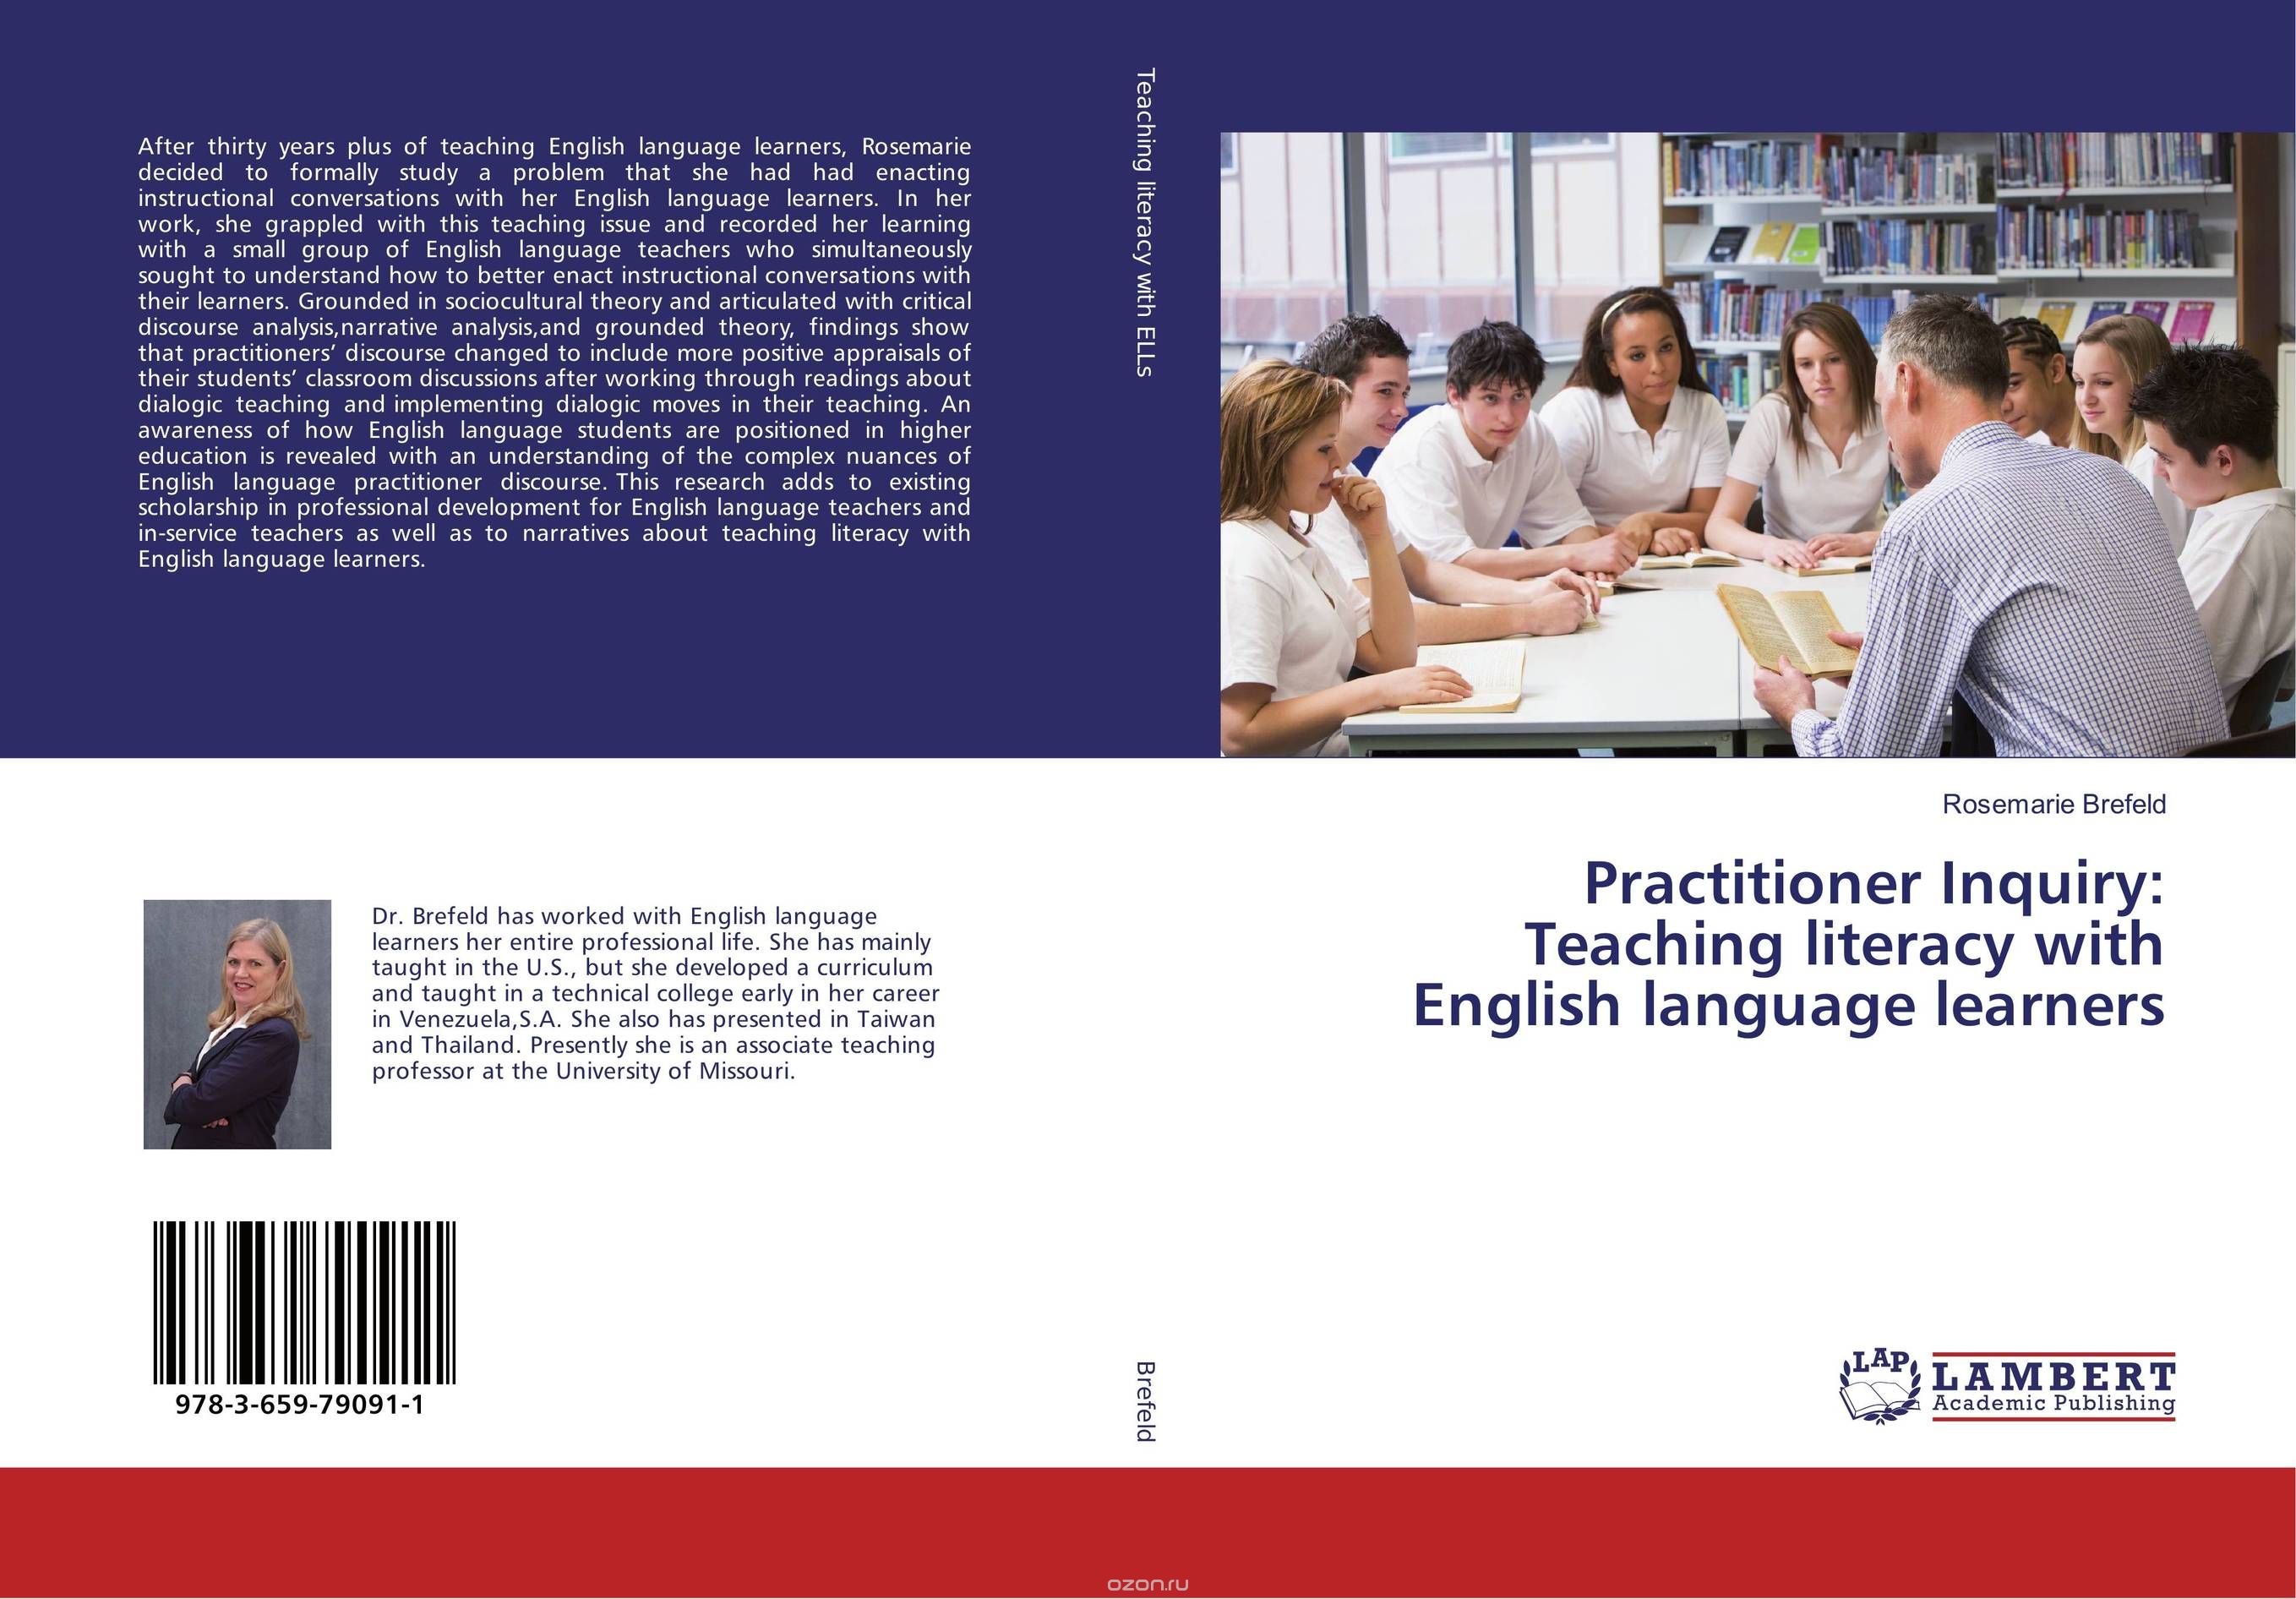 Скачать книгу "Practitioner Inquiry: Teaching literacy with English language learners"